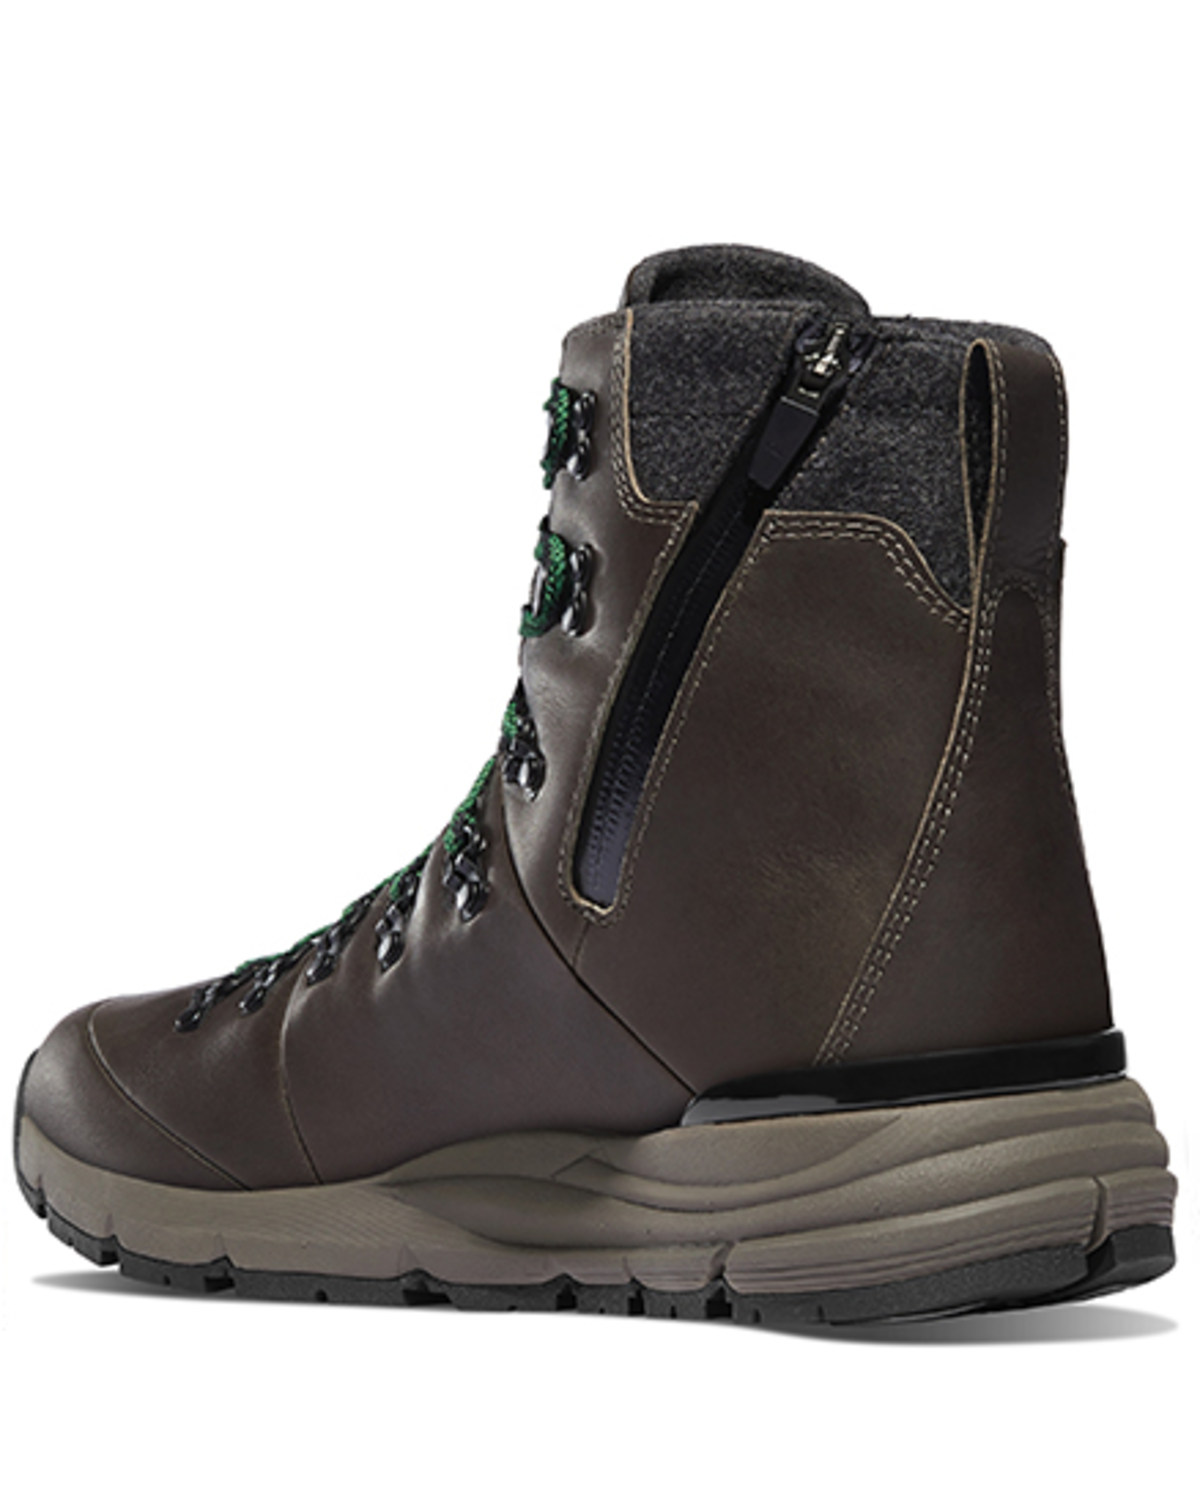 Danner Men's Arctic 600 Hiker Boots - Soft Toe | Boot Barn